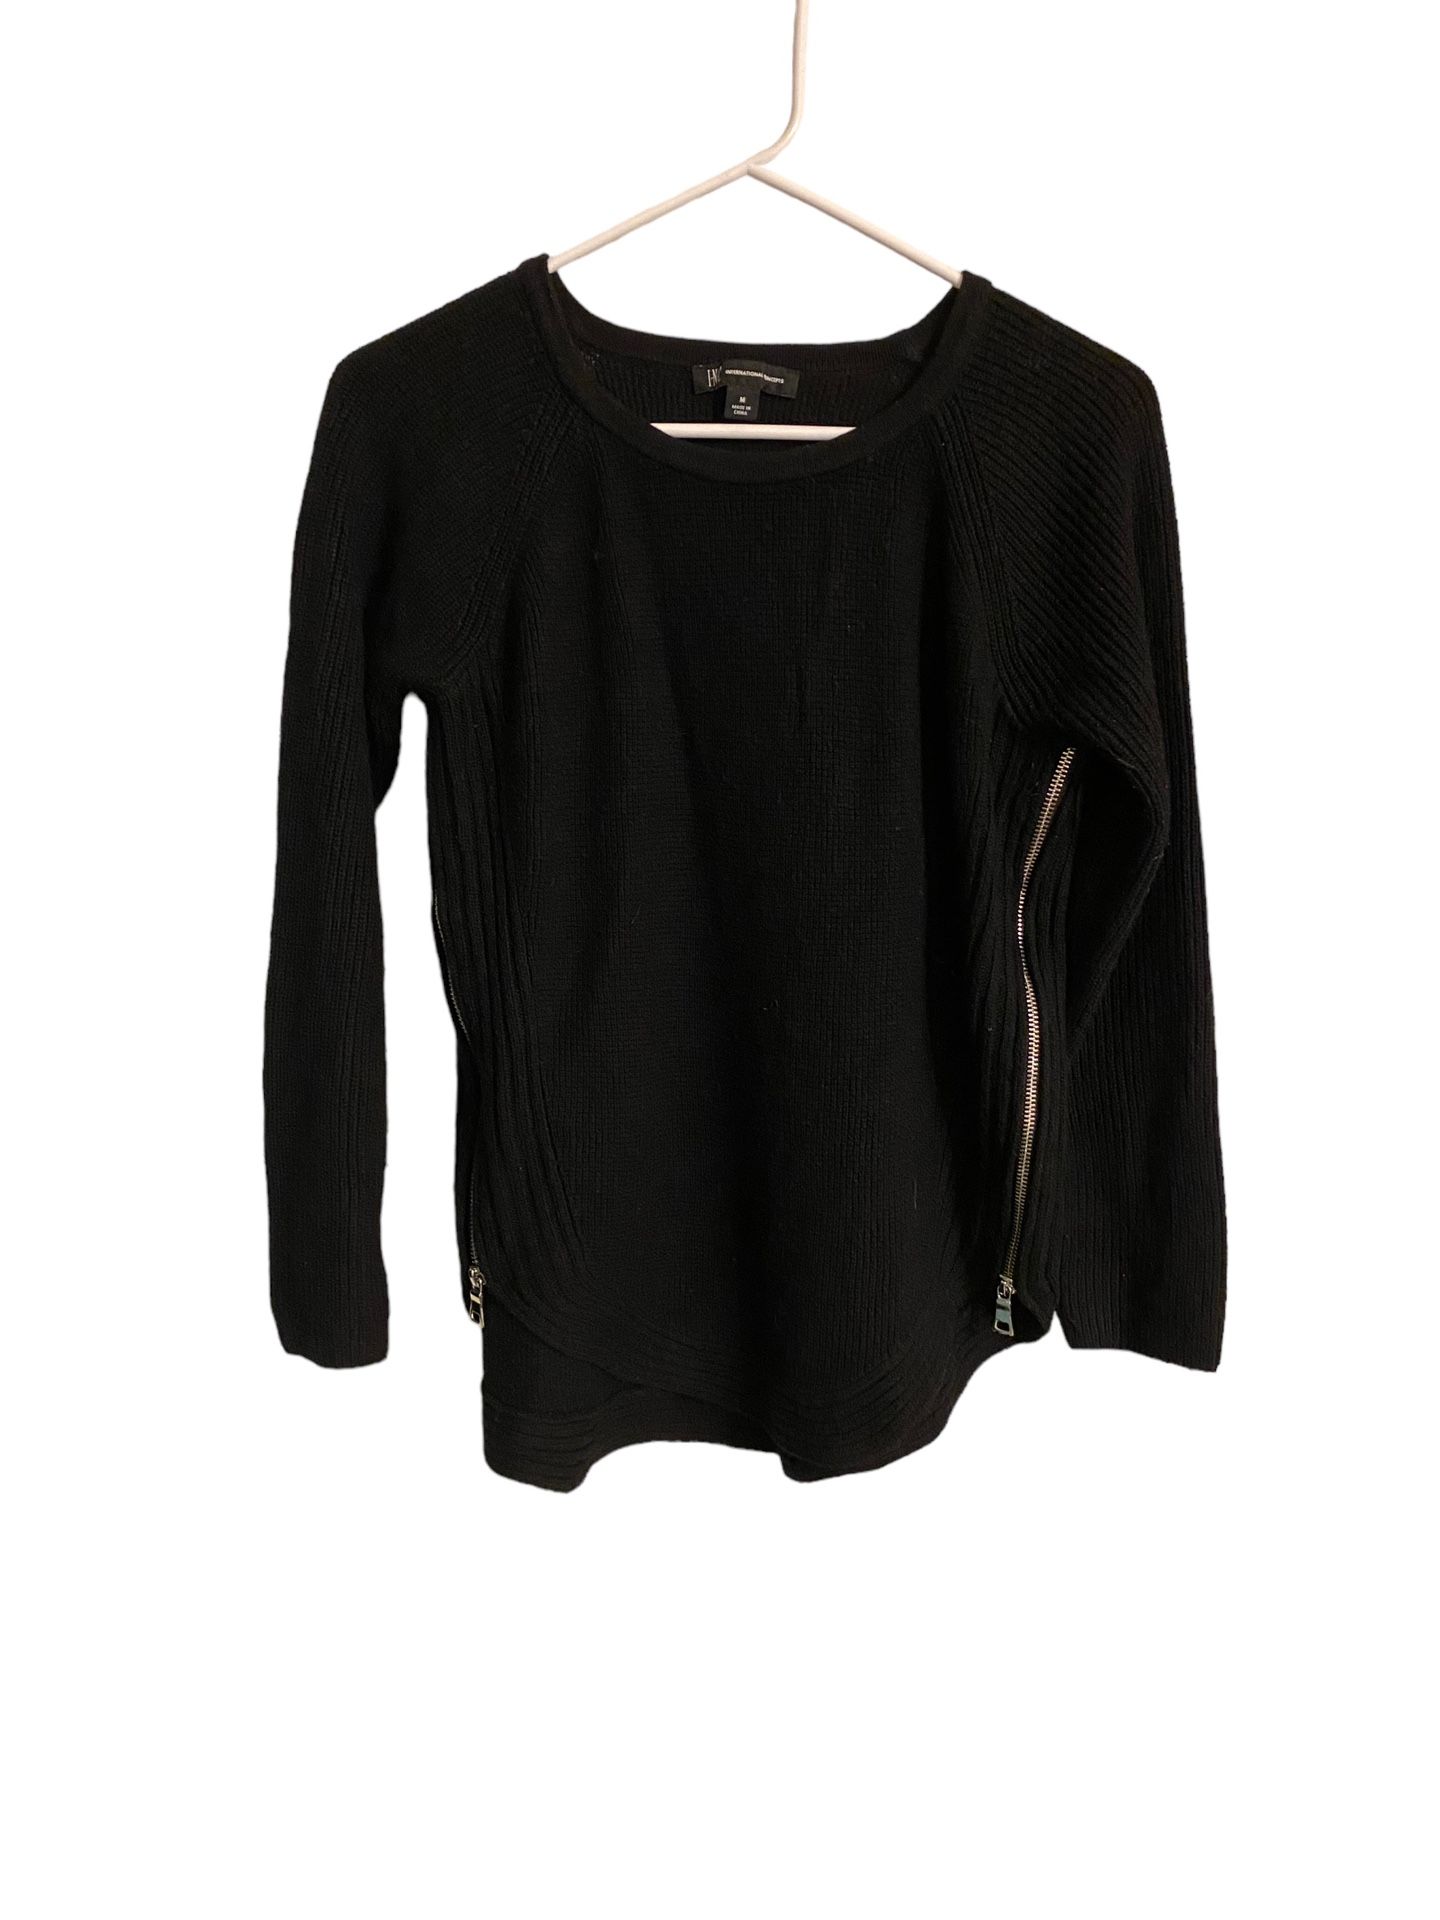 Inc International Concepts Women’s Black, Side Zip Sweater, Size Medium 